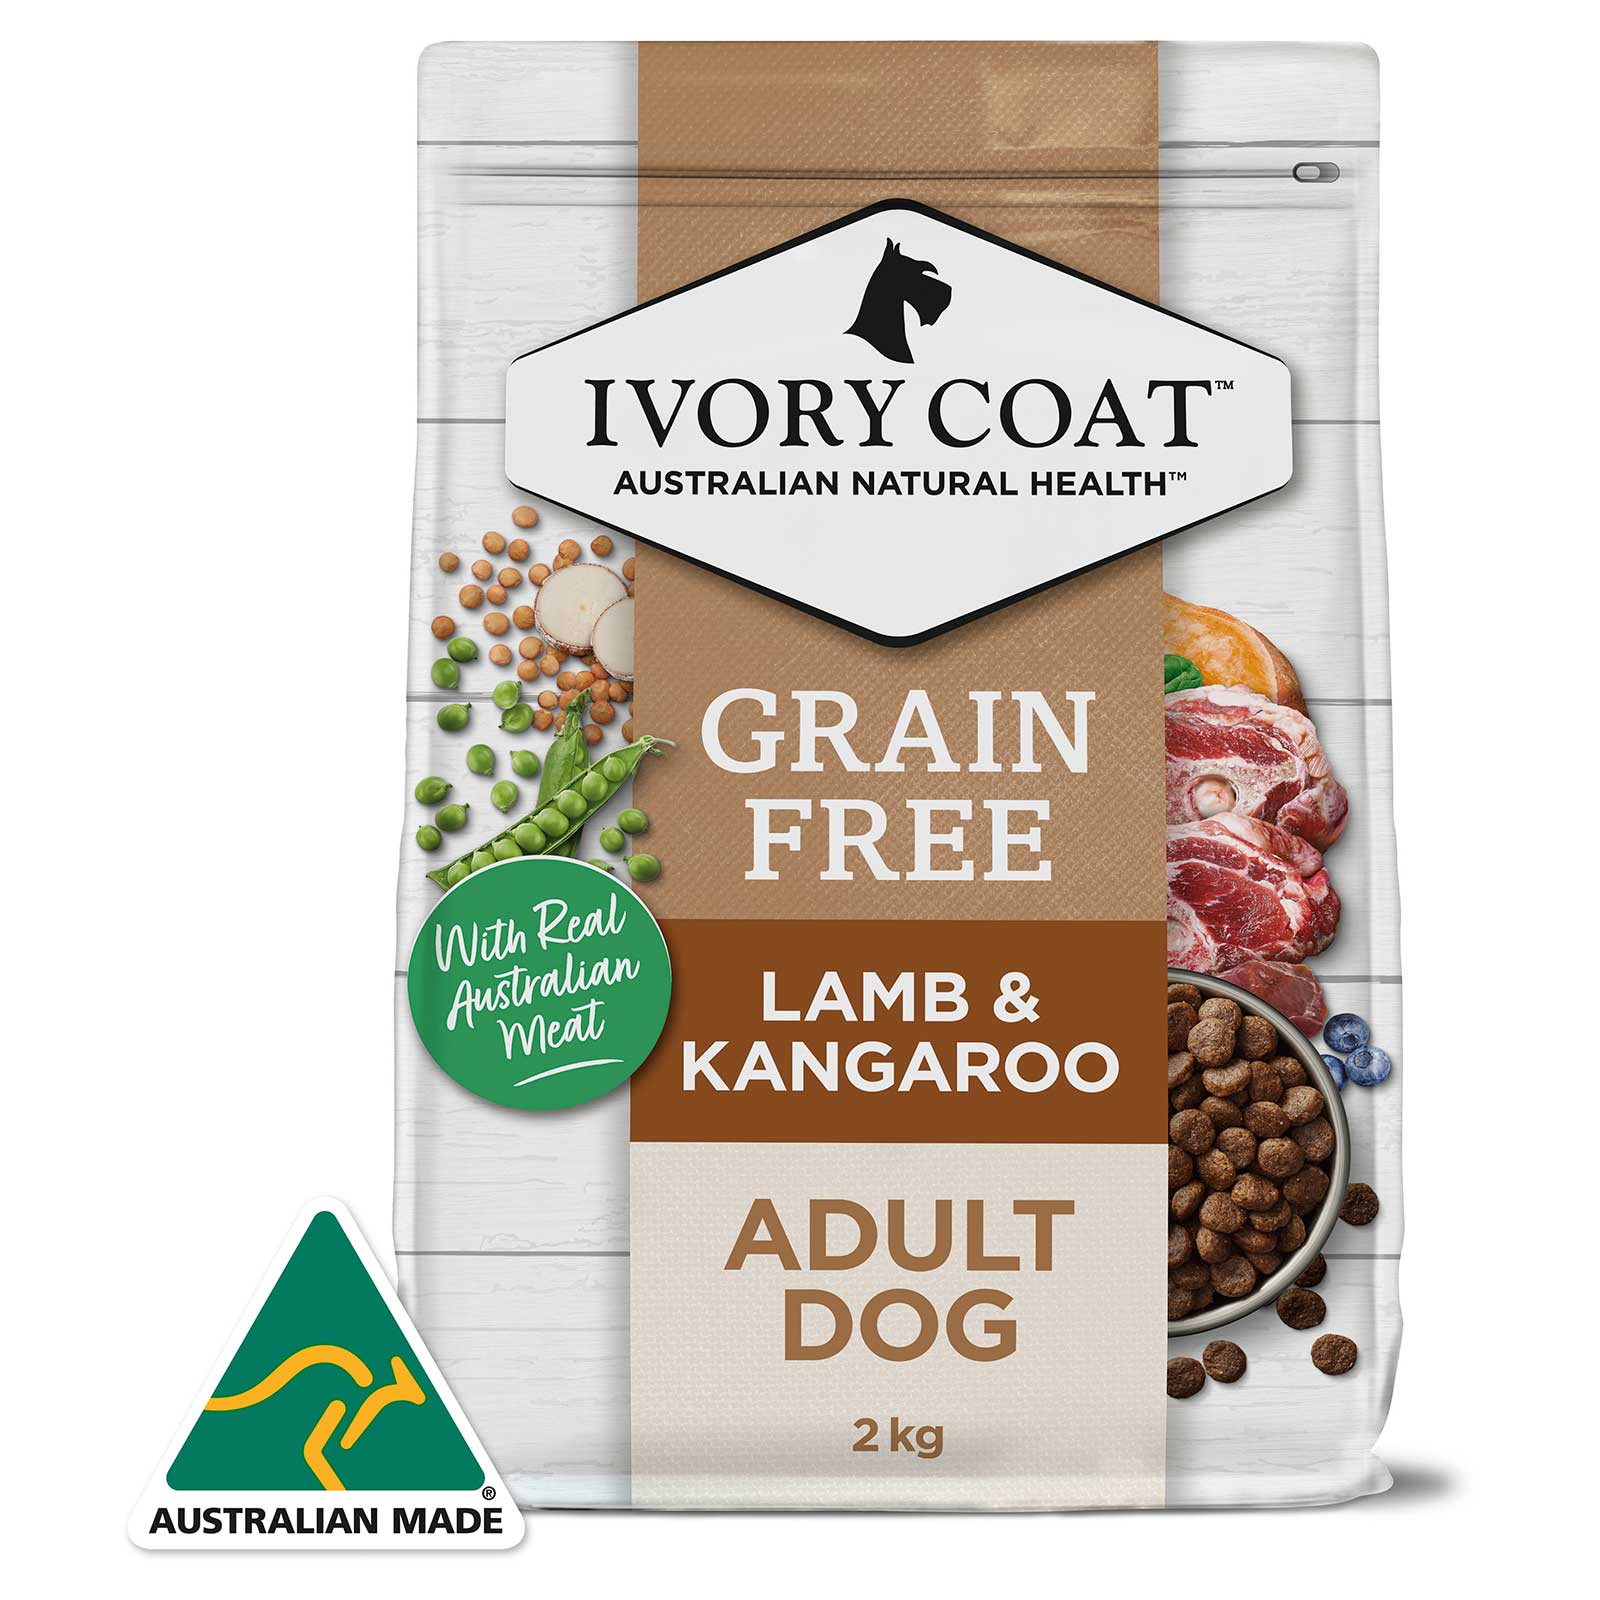 Ivory Coat Grain Free Dog Food Adult Lamb & Kangaroo